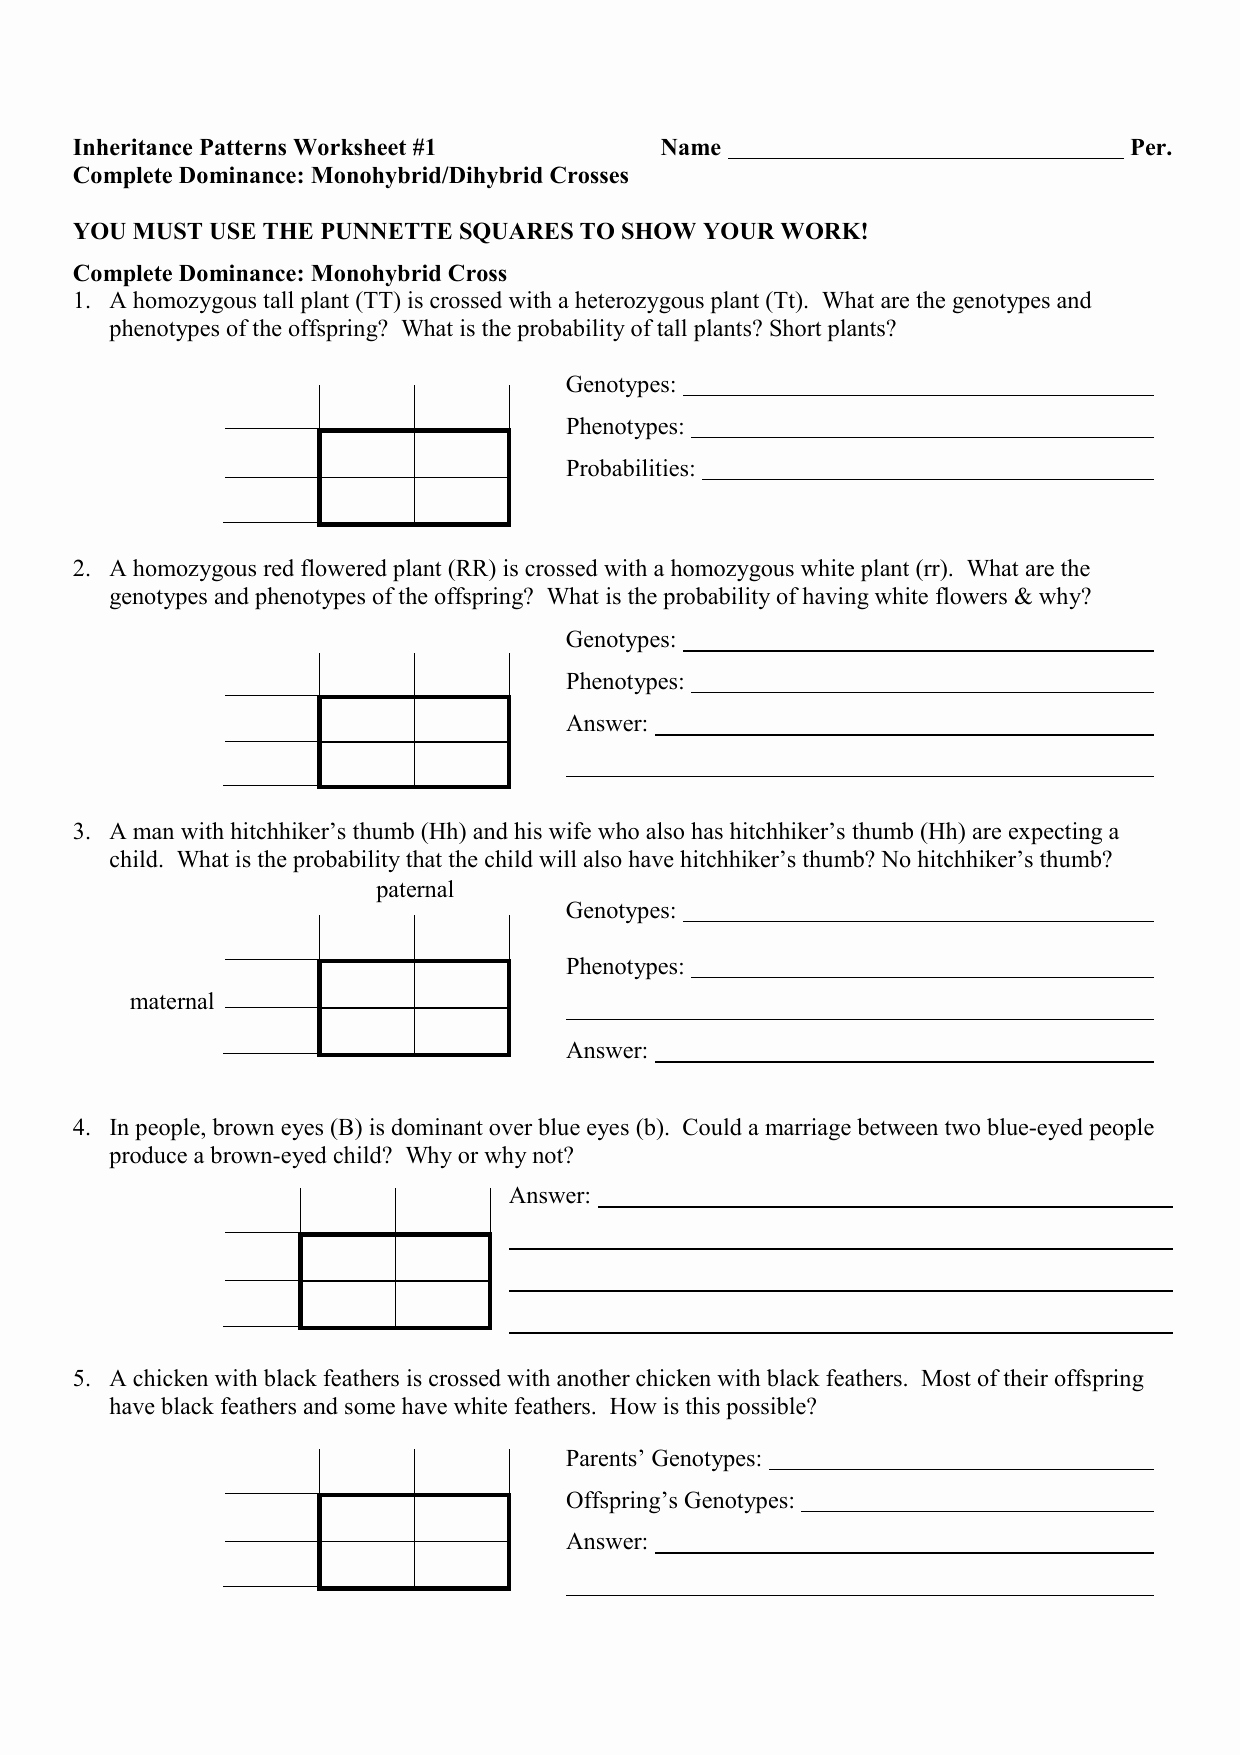 Monohybrid Cross Practice Problems Worksheet Best Of Monohybrid and Dihybrid Crosses Worksheet